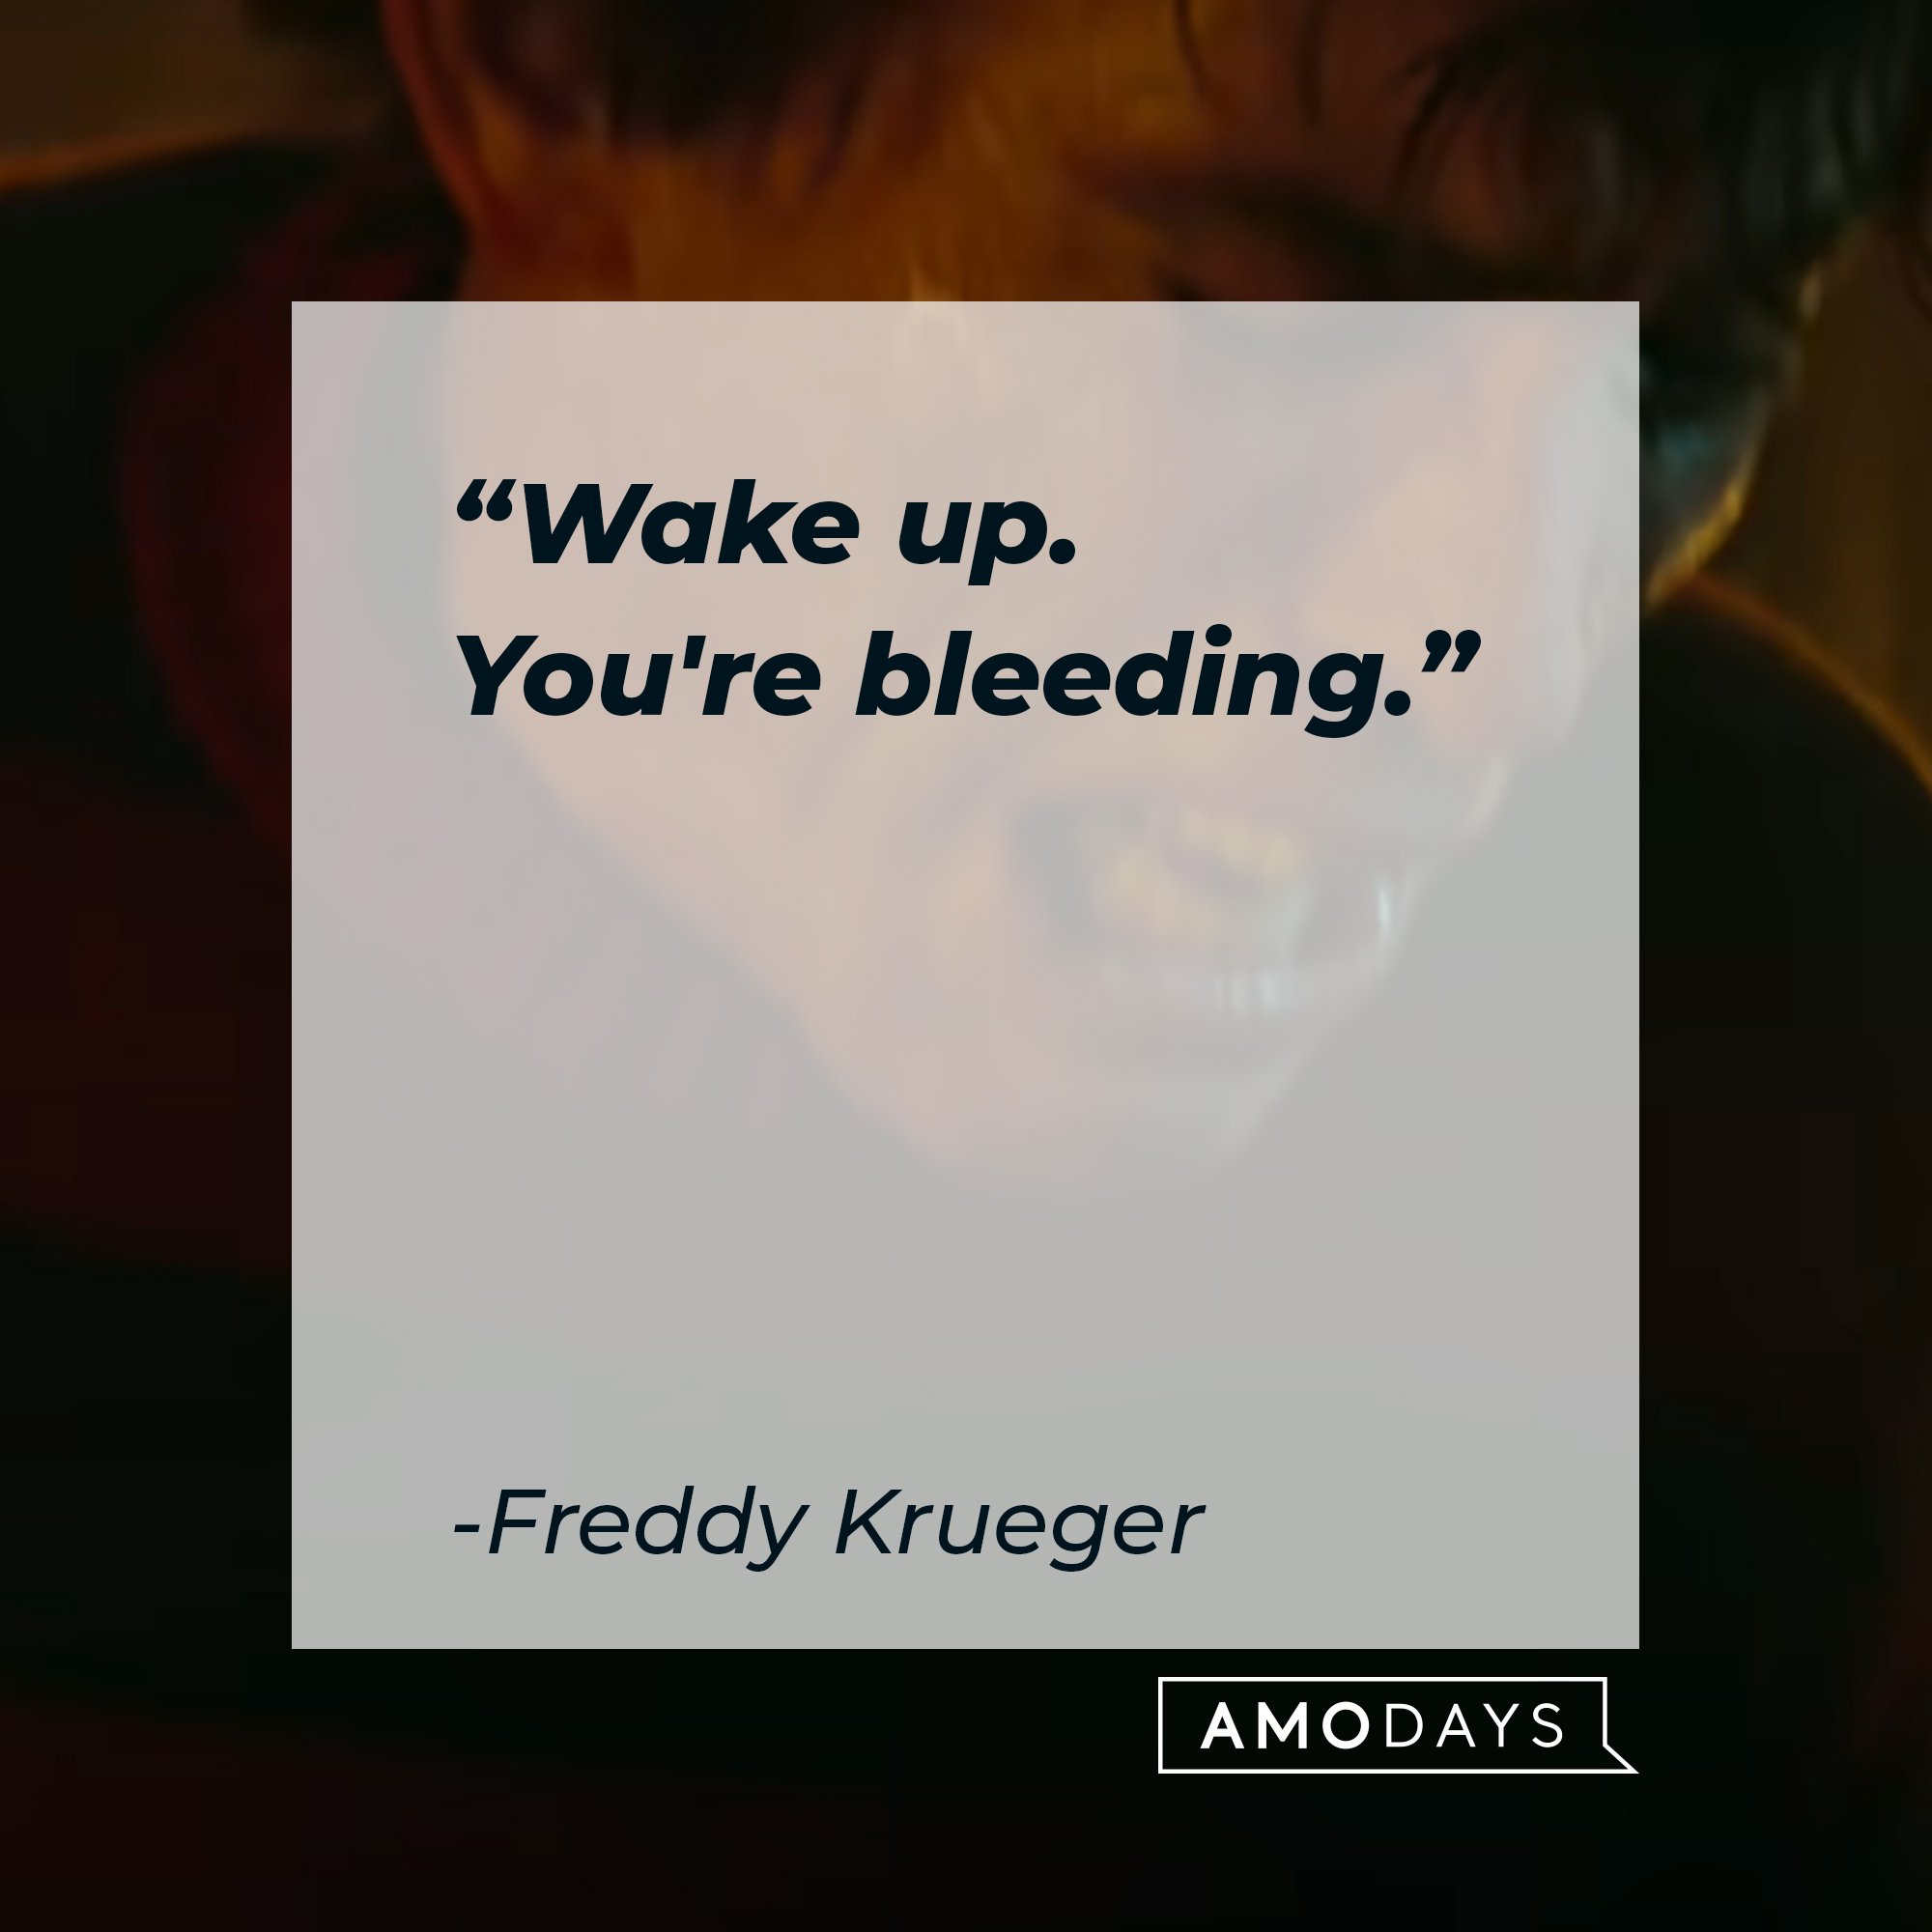 Freddy Krueger’s quote: "Wake up.You're bleeding." | Image: AmoDays